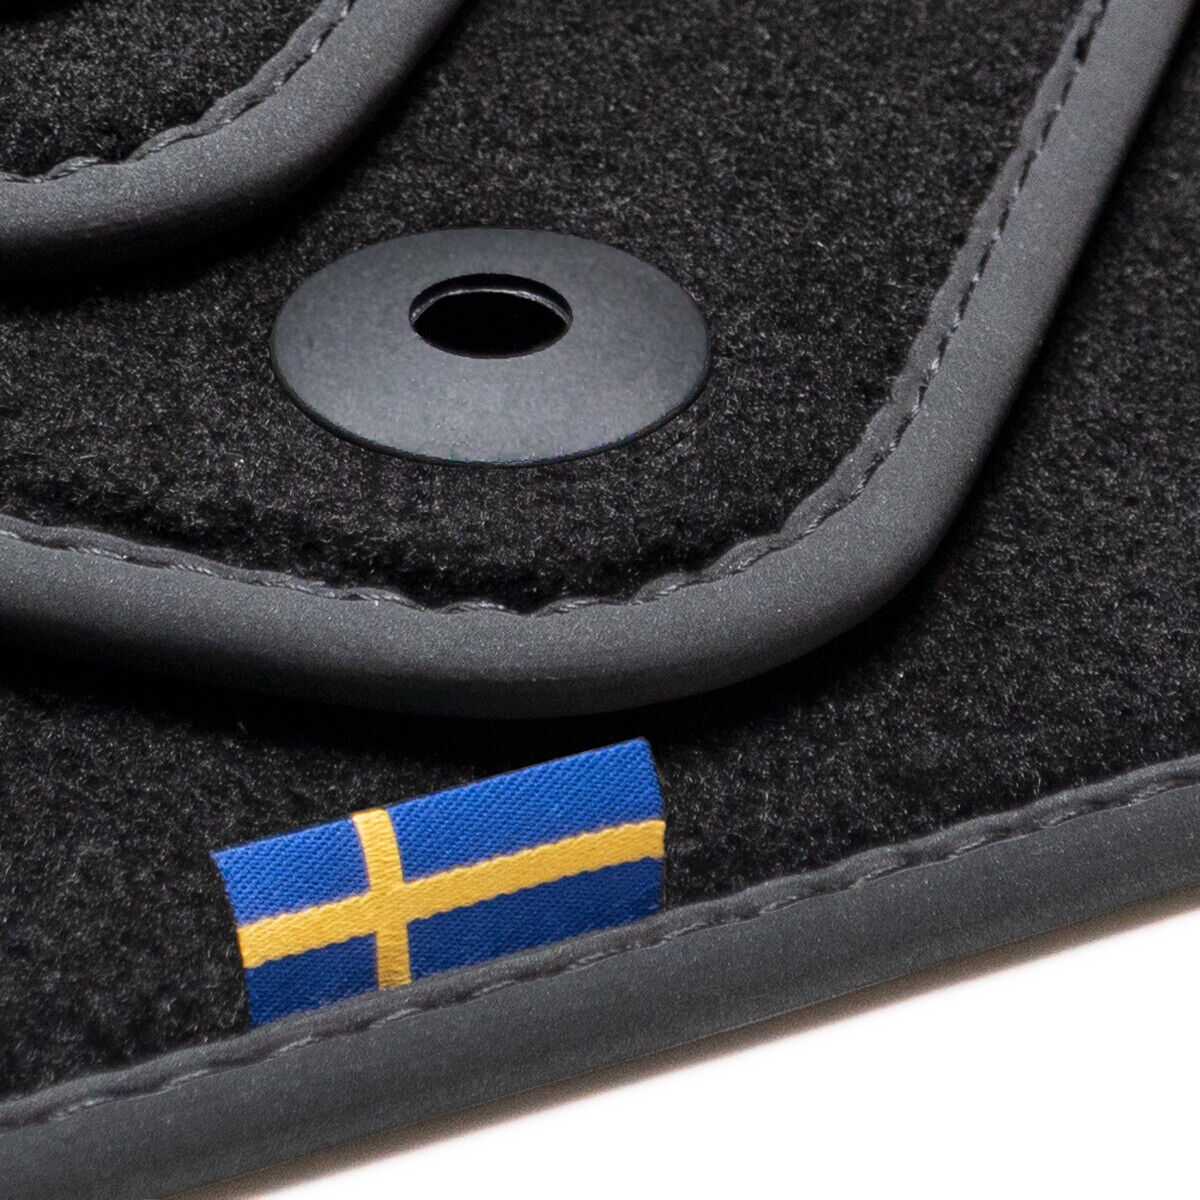 For Volvo C30 Black Carpet Car Mats 4pc– 2006-2013 OEM quality R Design